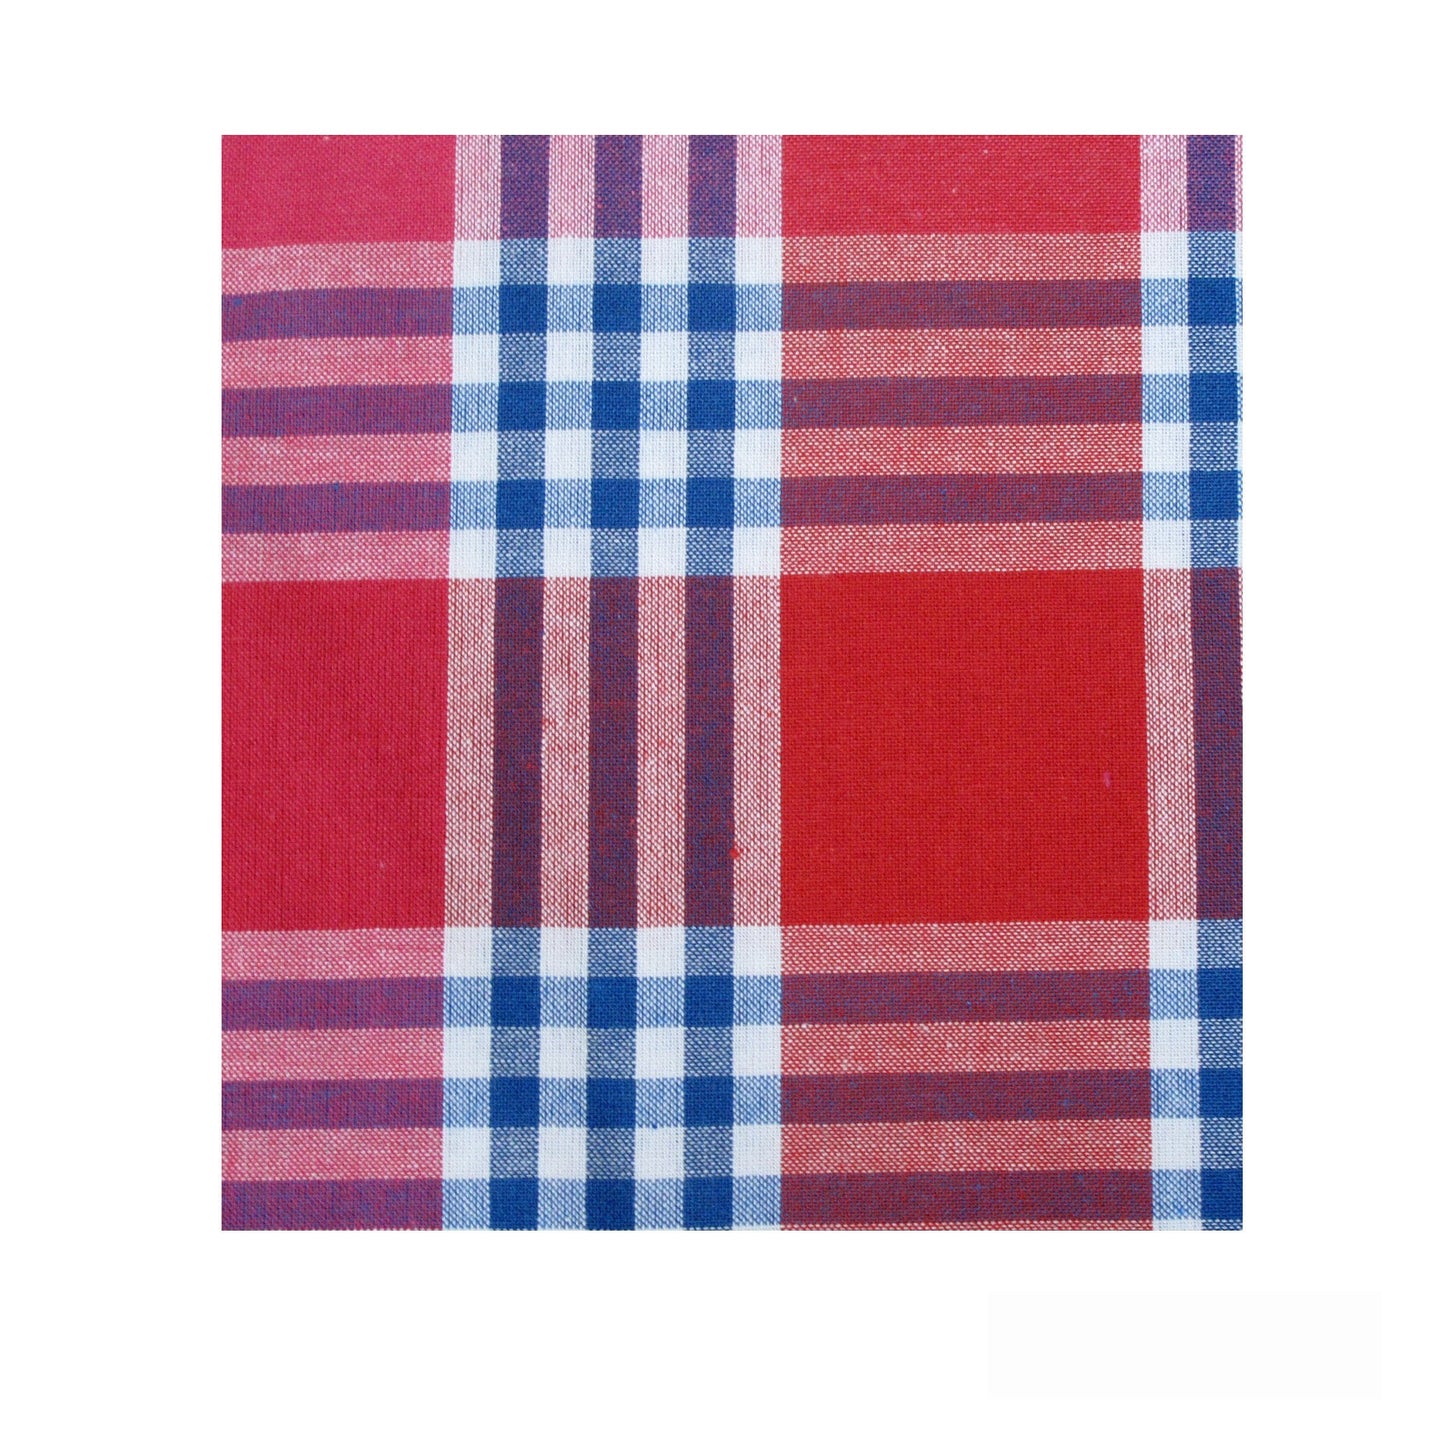 Check Table Cloth Tartan Red 180 x 180 cm